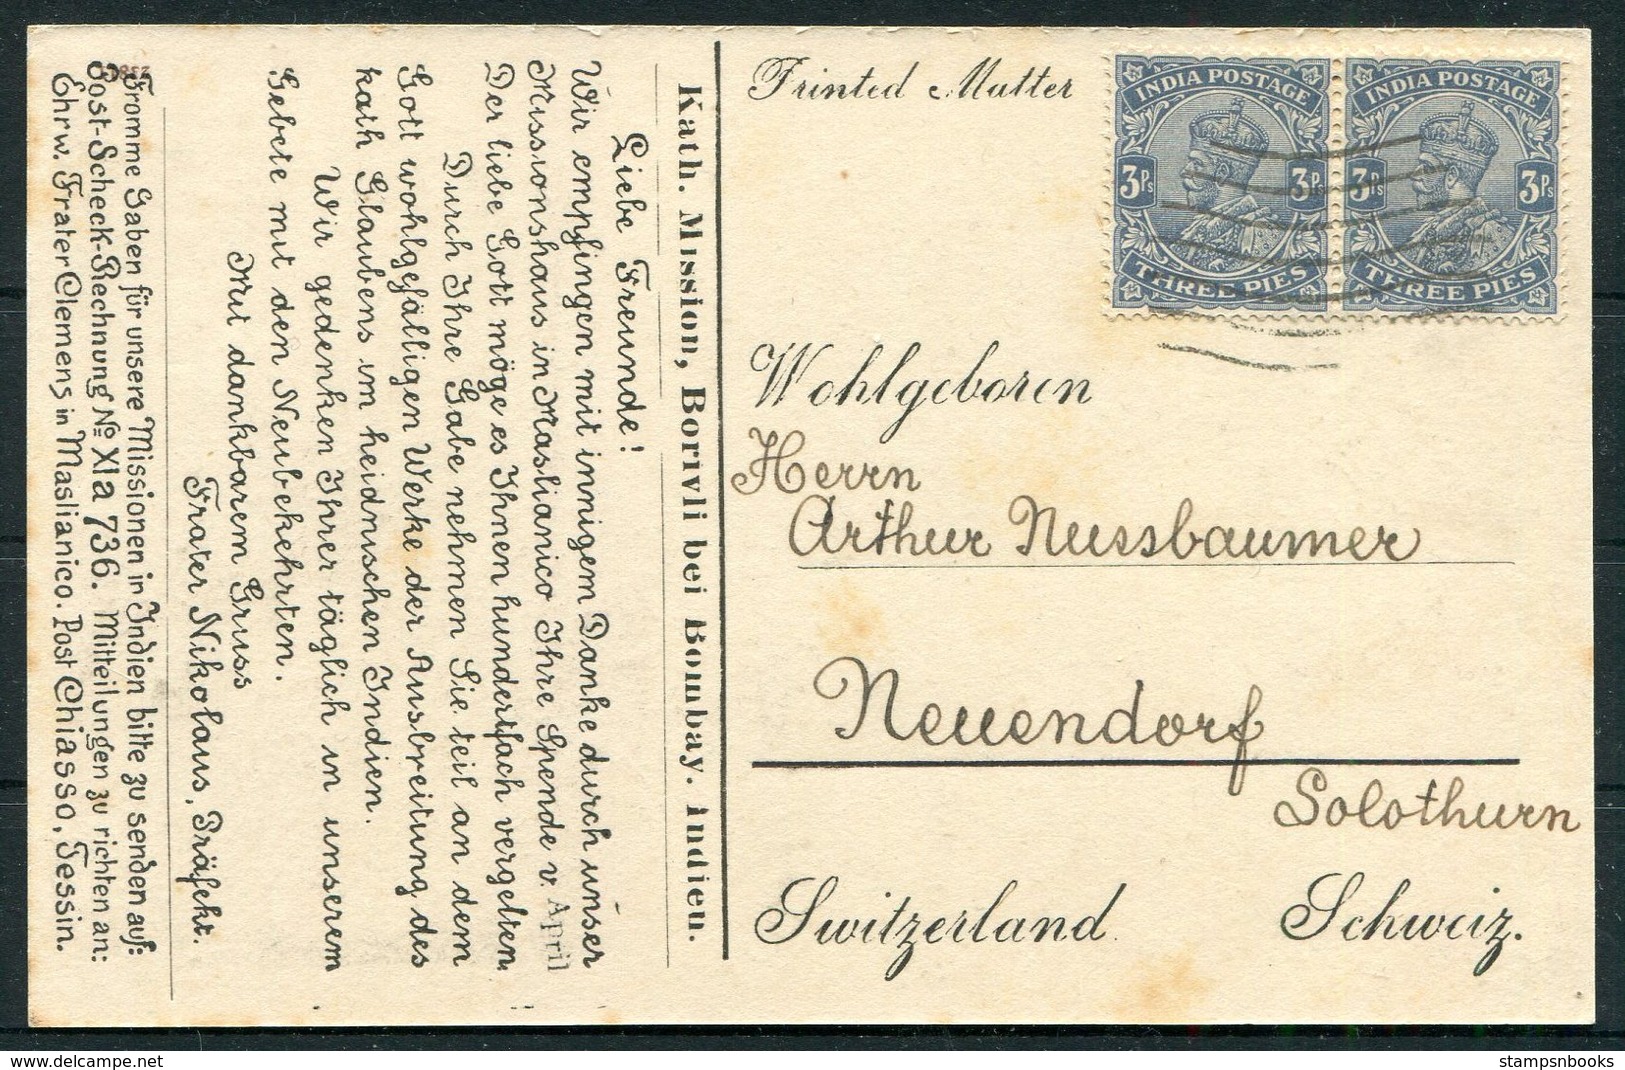 India 3 X Kathol Mission, Borivli Bombay "Liebe Freunde" Postcards - Arthur Nussbaumer, Neuendorf Switzerland - 1911-35 King George V